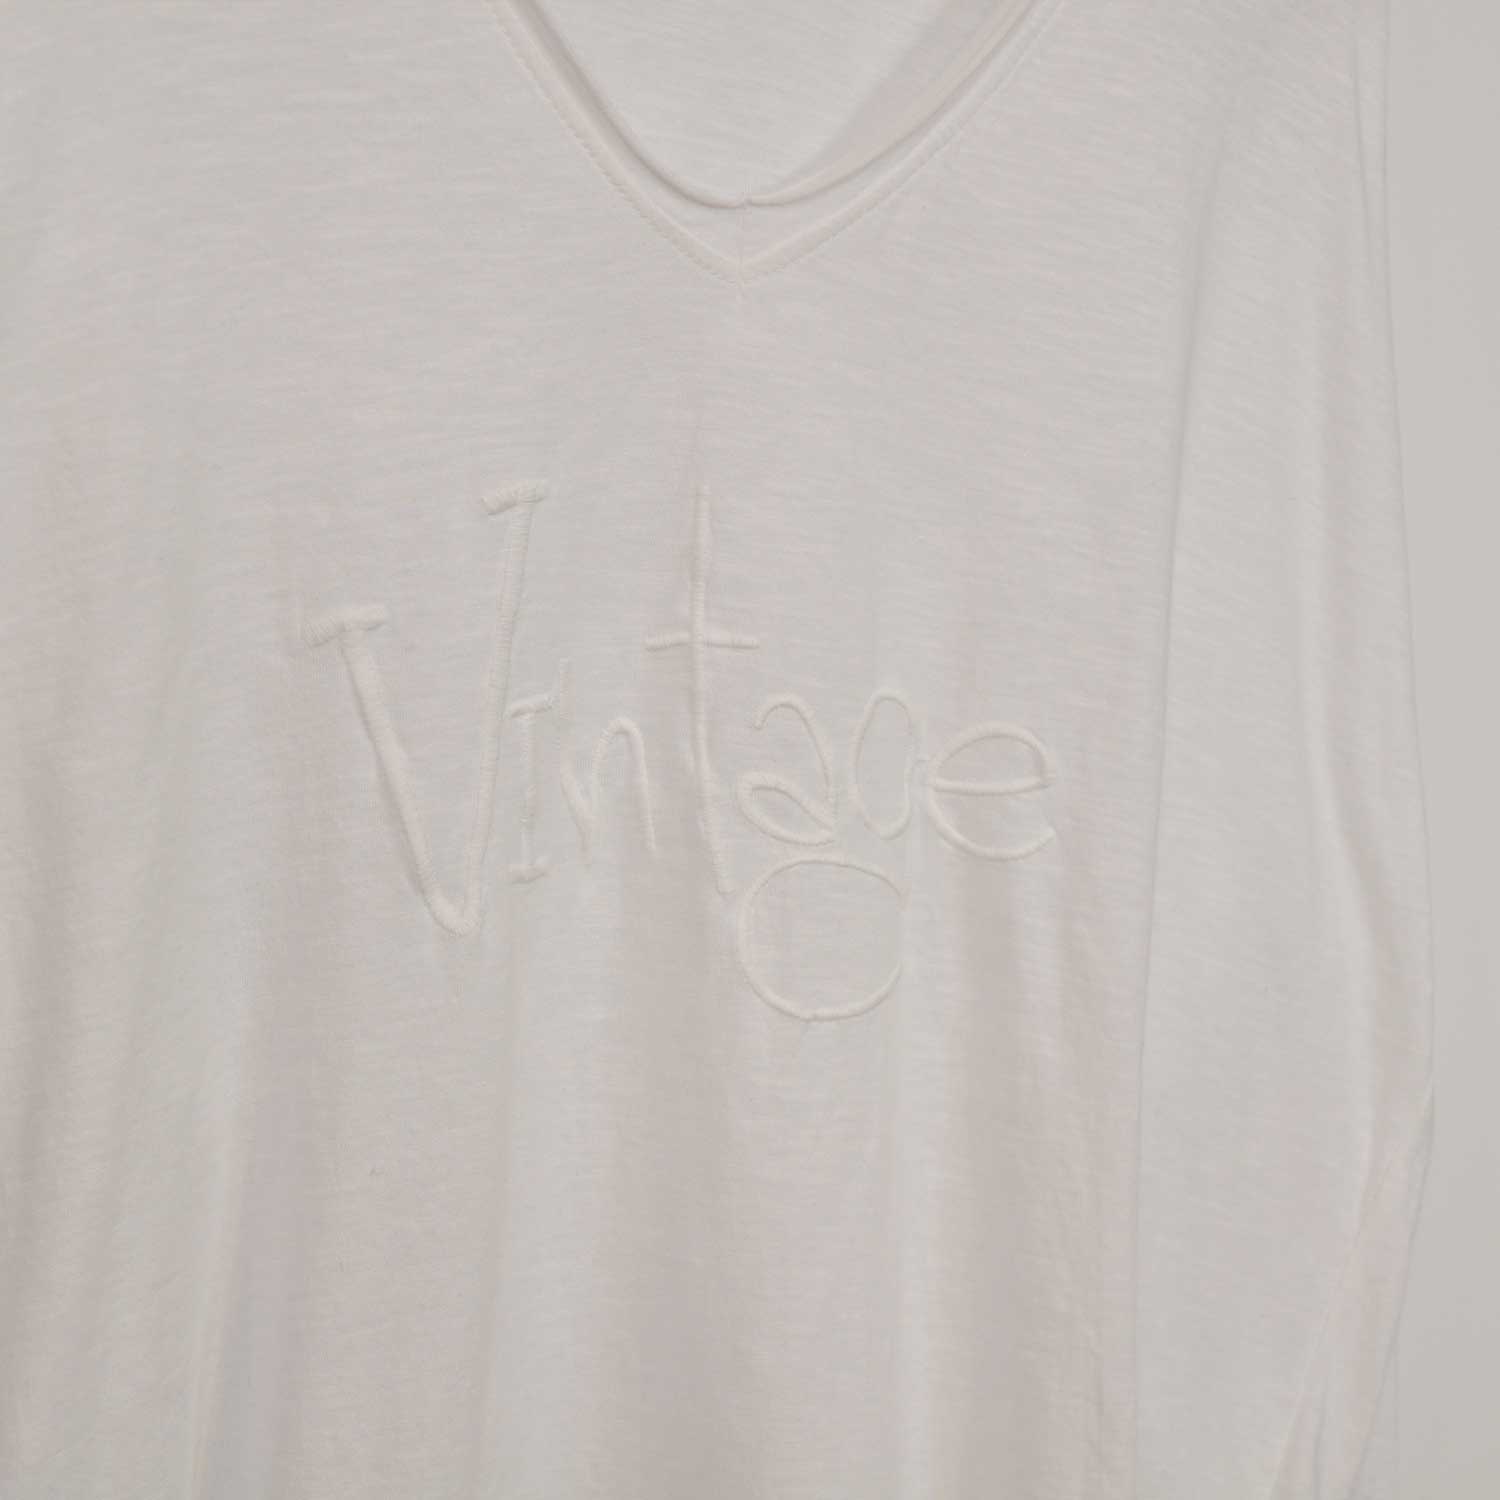 White Vintage t-shirt